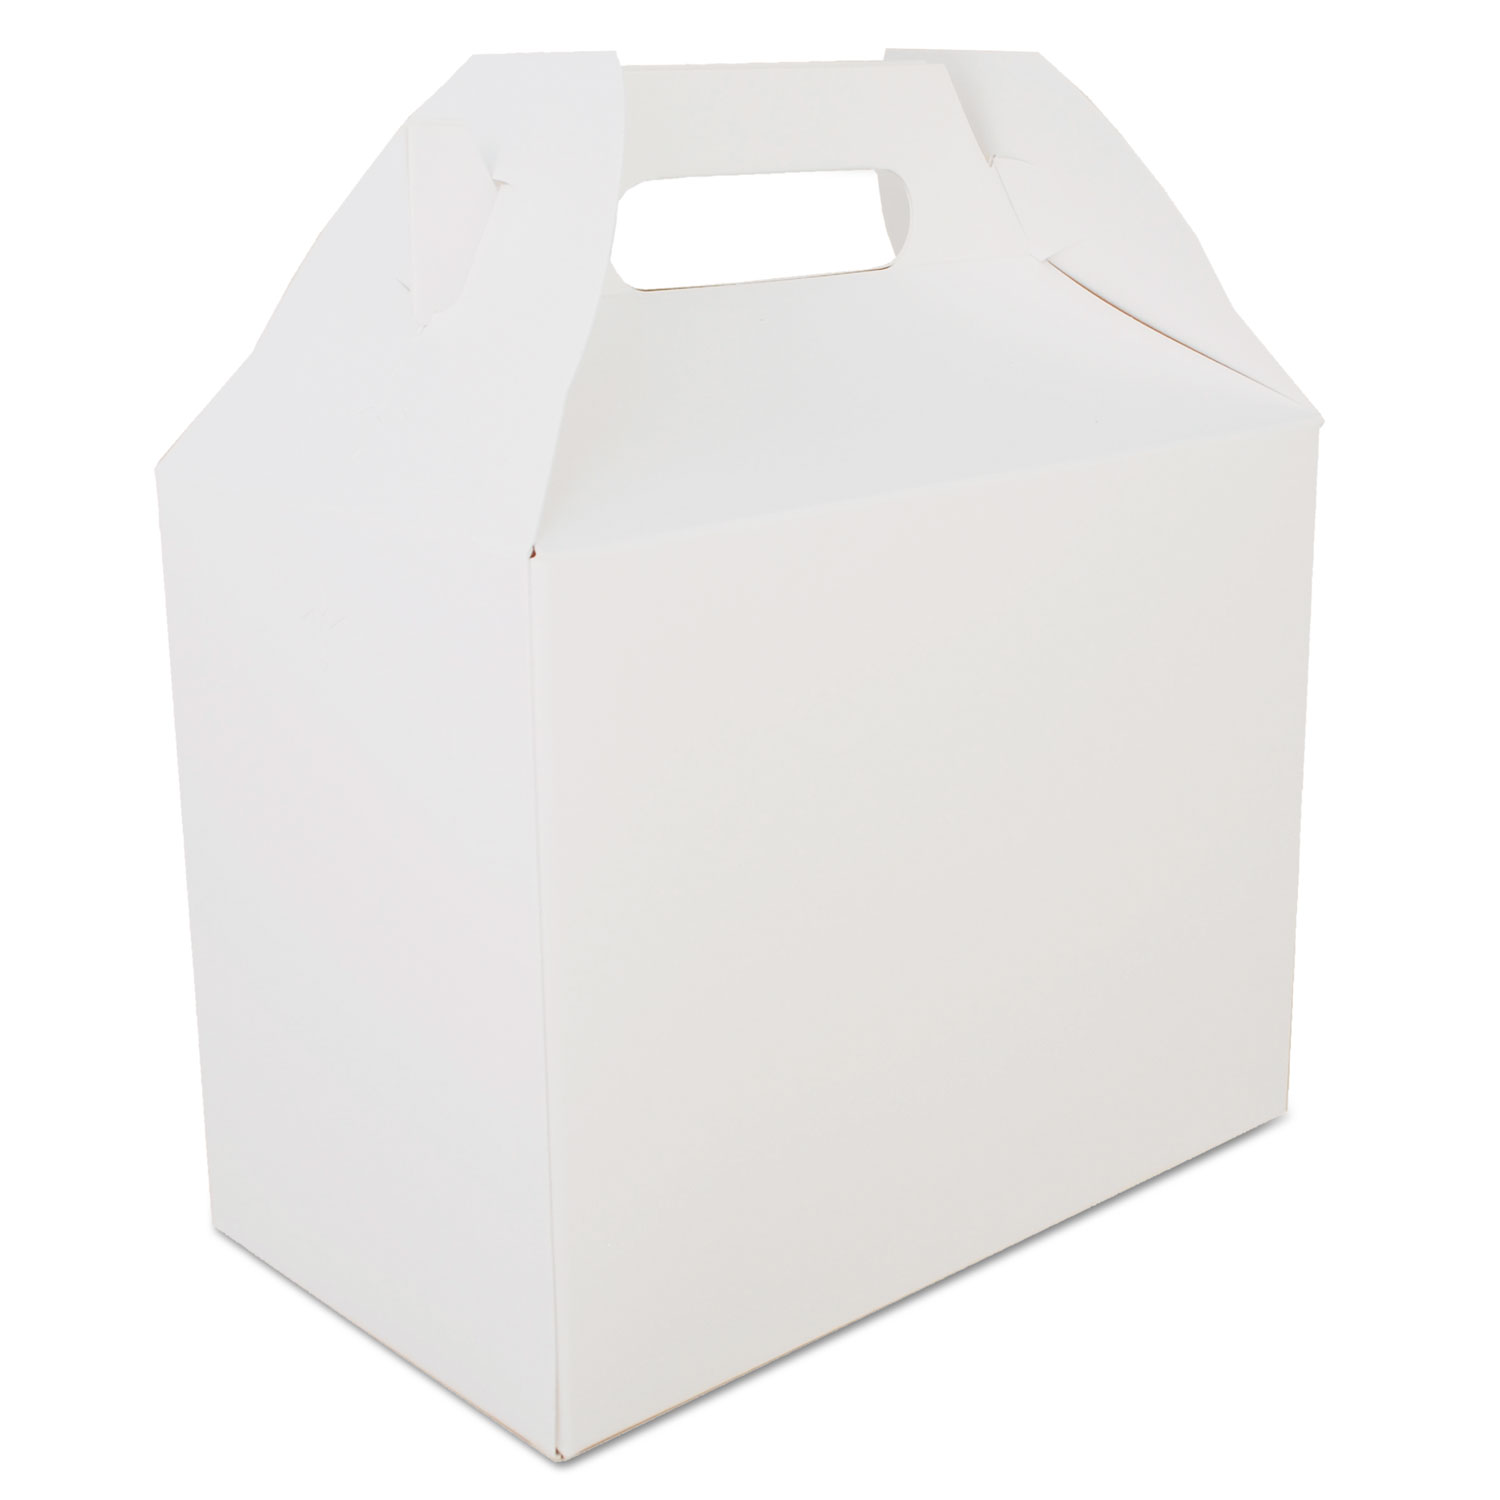  SCT 2709 Carryout Barn Boxes, 8 7/8 x 5 x 6 3/4, White, 150/Carton (SCH2709) 